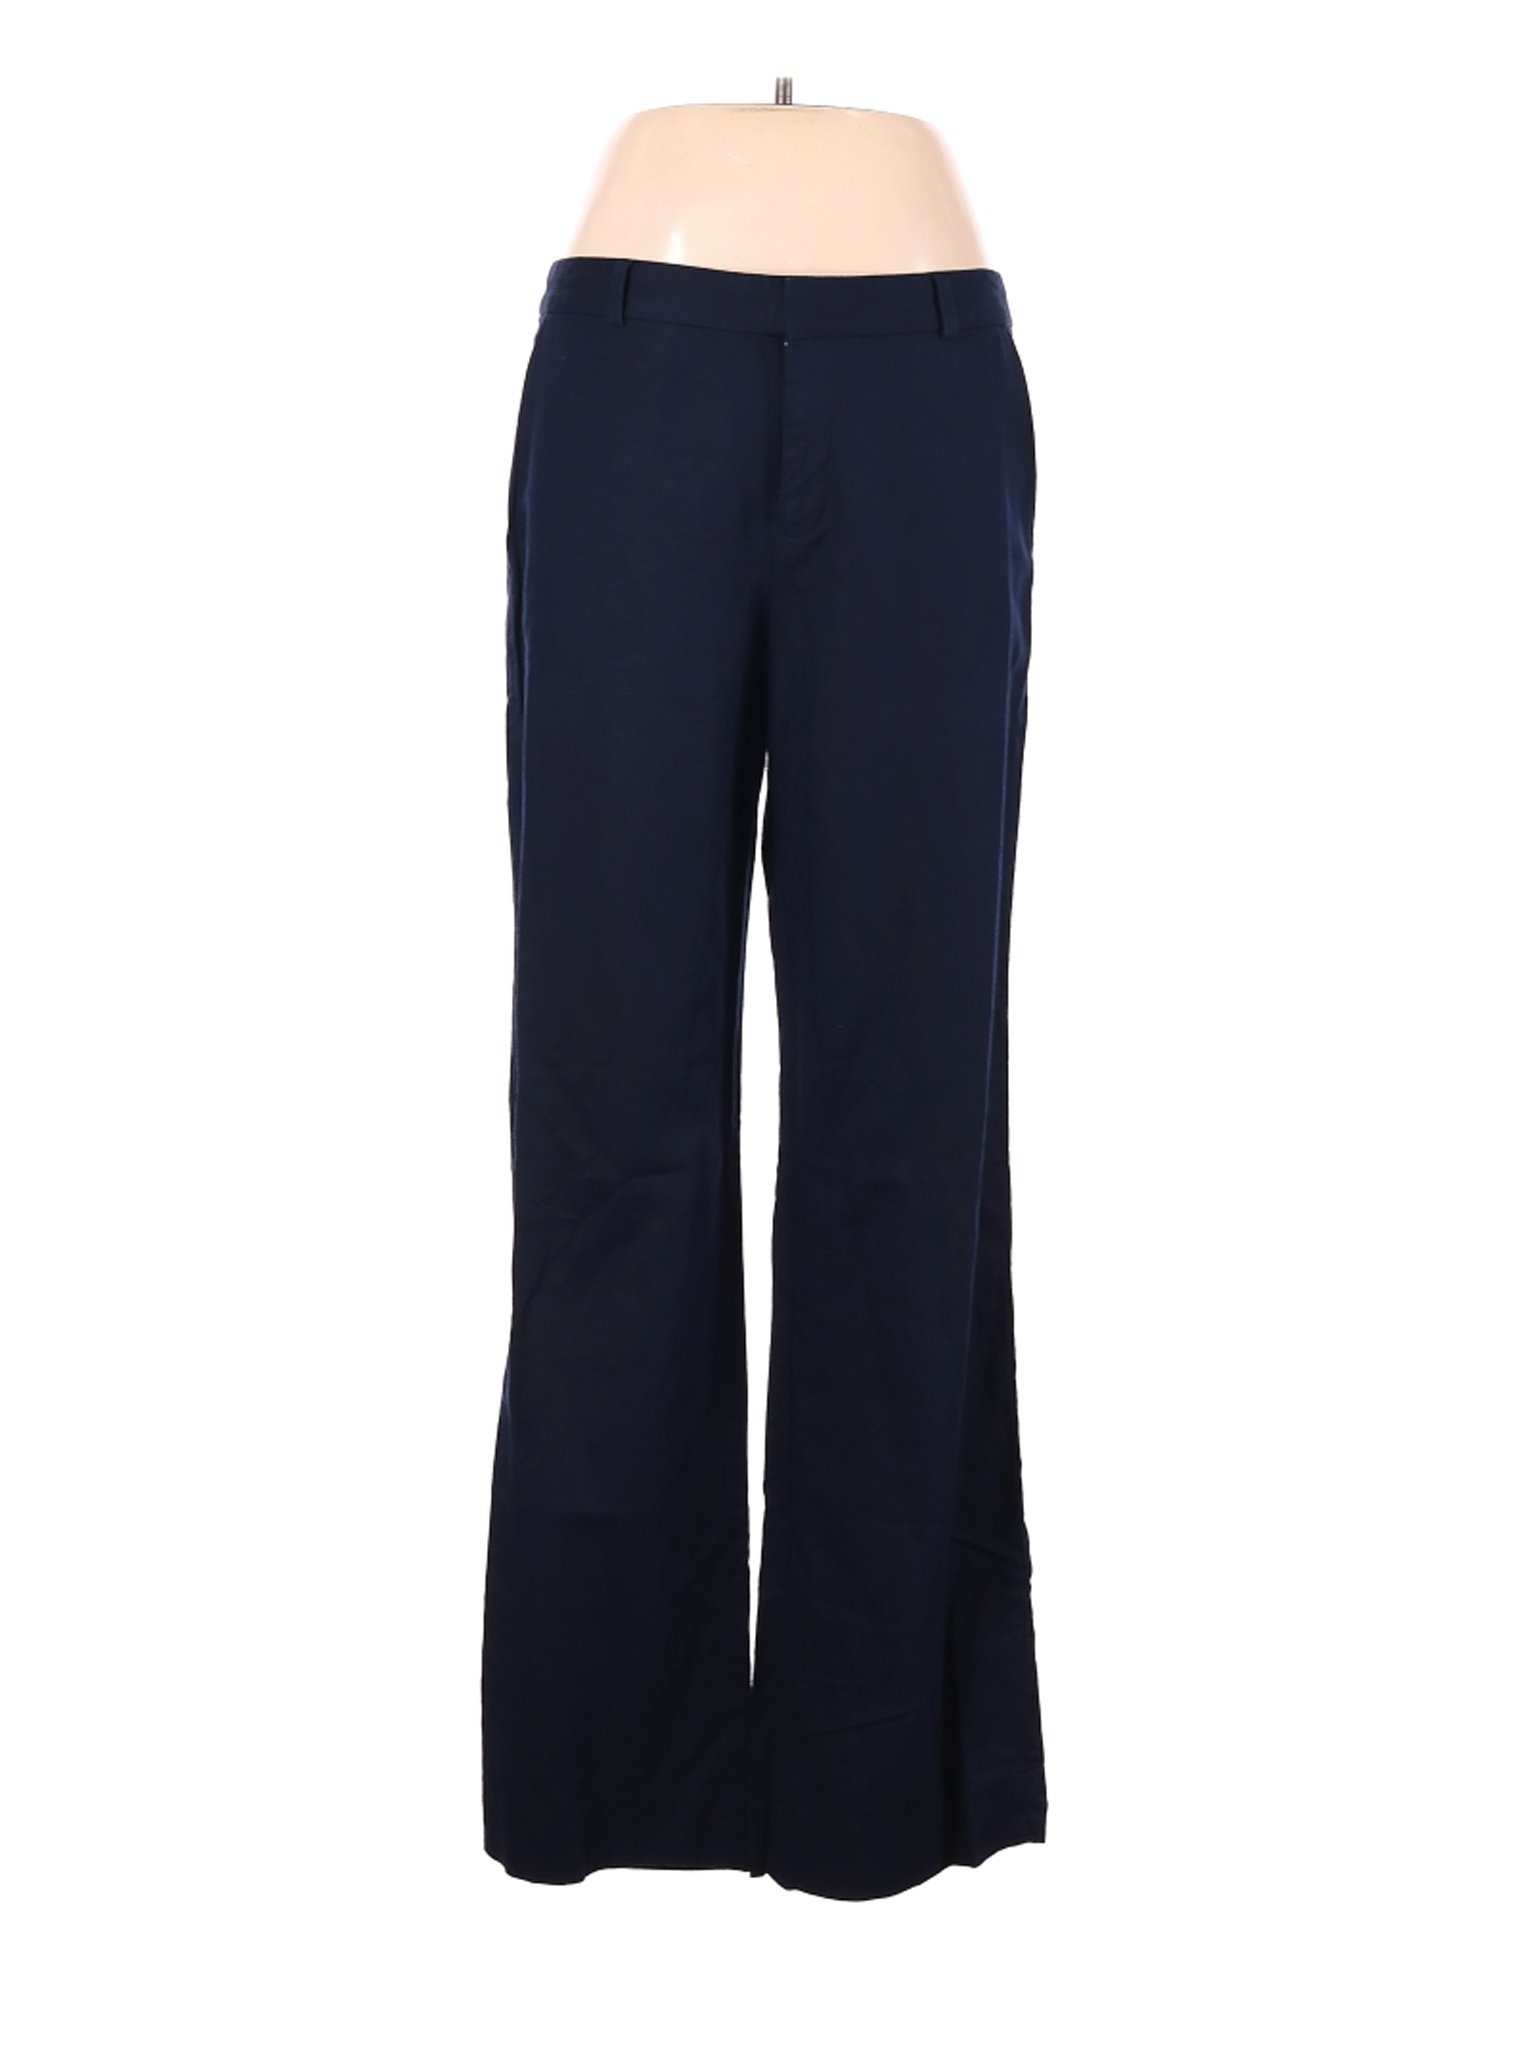 Banana Republic Factory Store Women Blue Linen Pants 10 | eBay